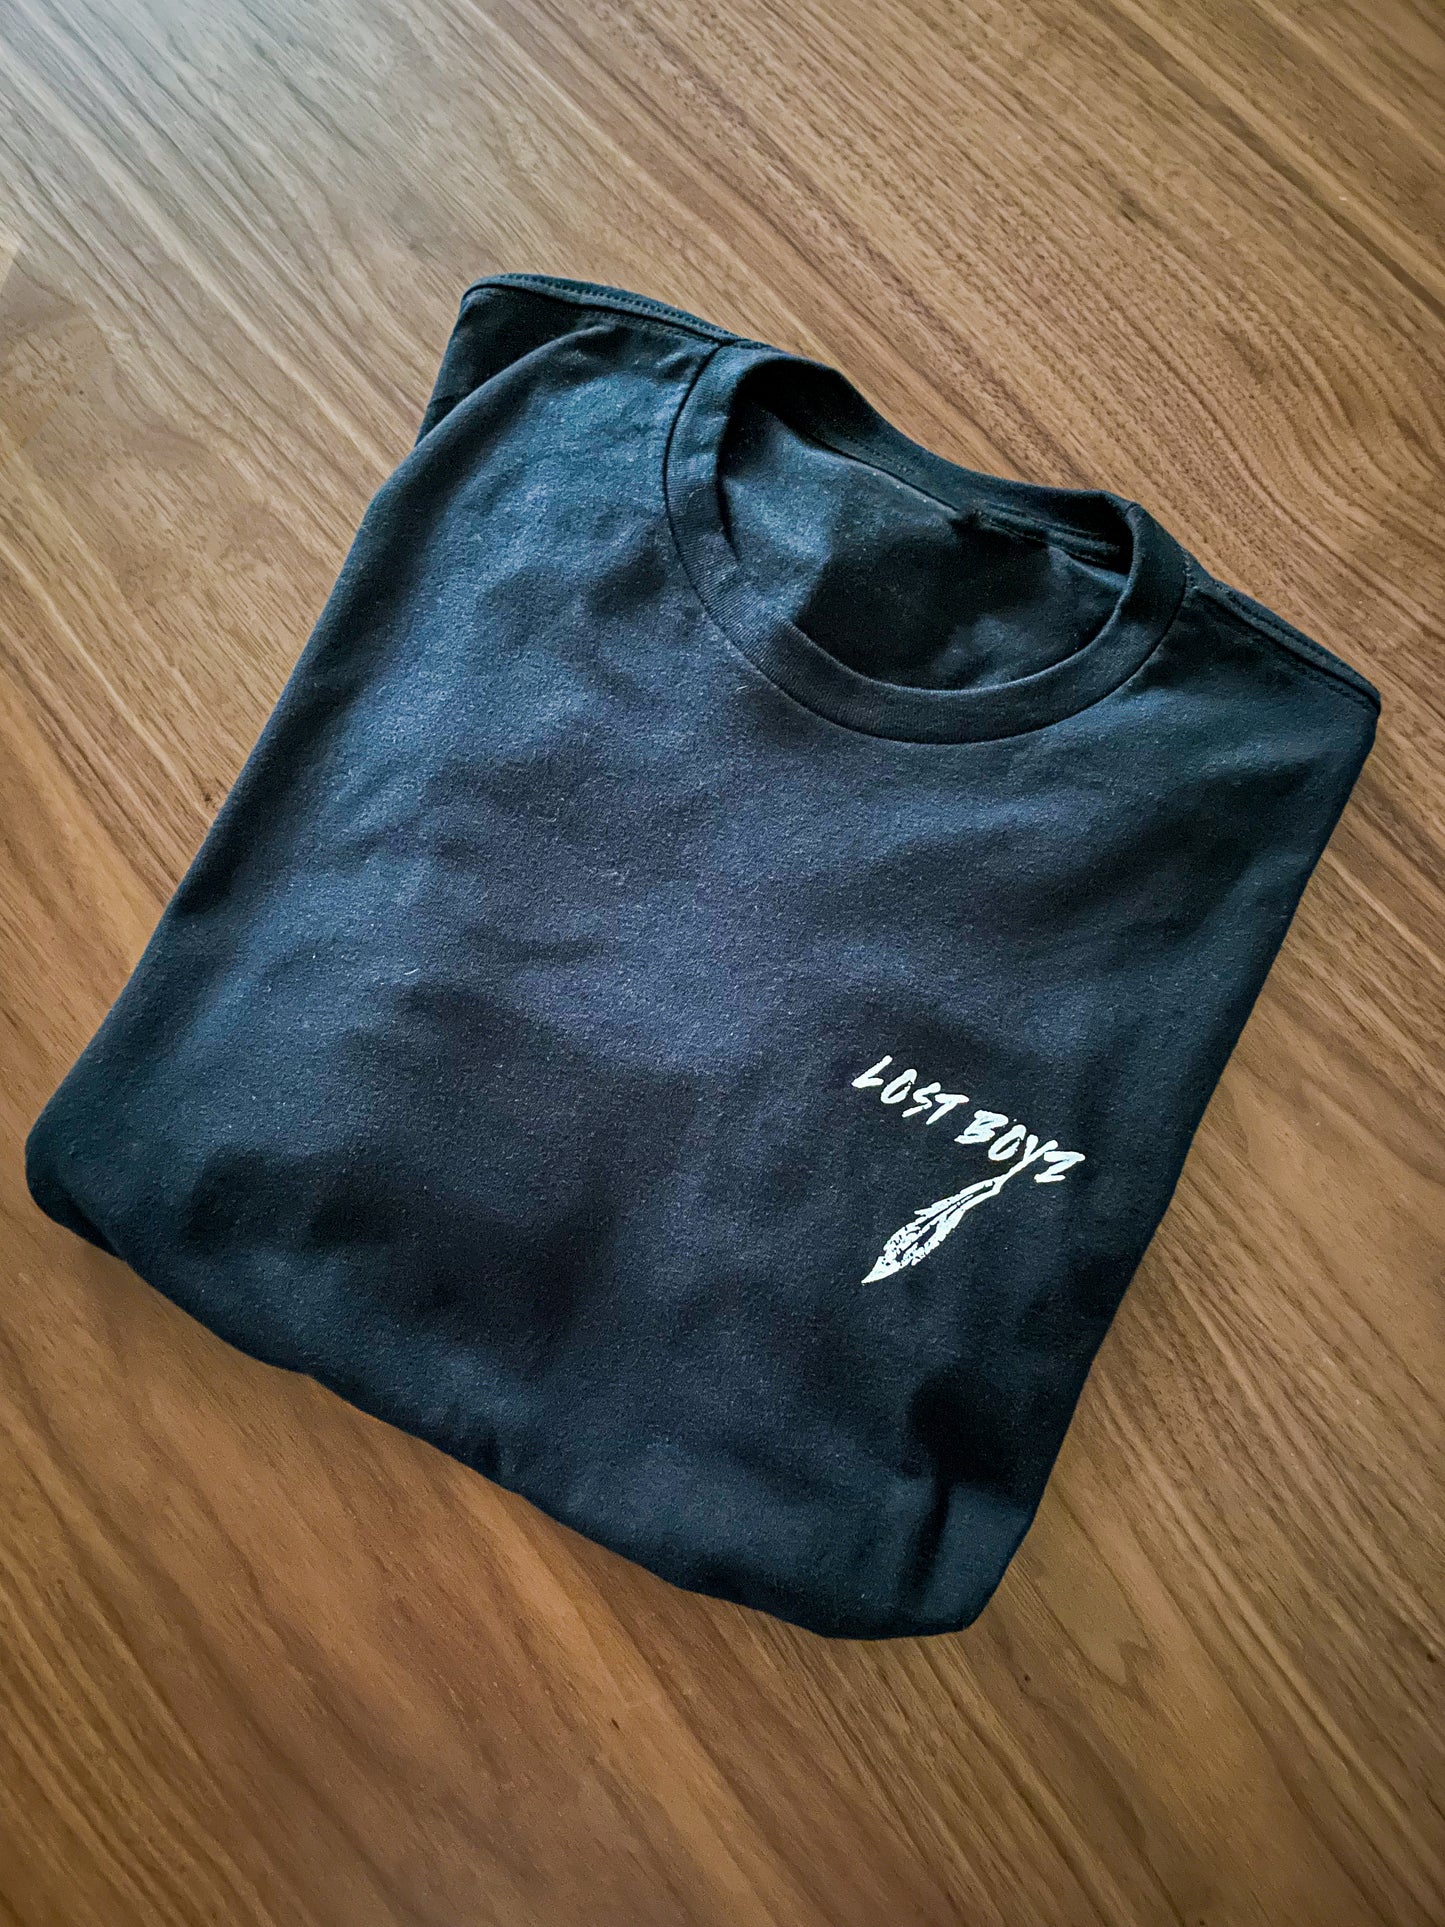 Bangarang Black Short Sleeve T-Shirt - OG Collection